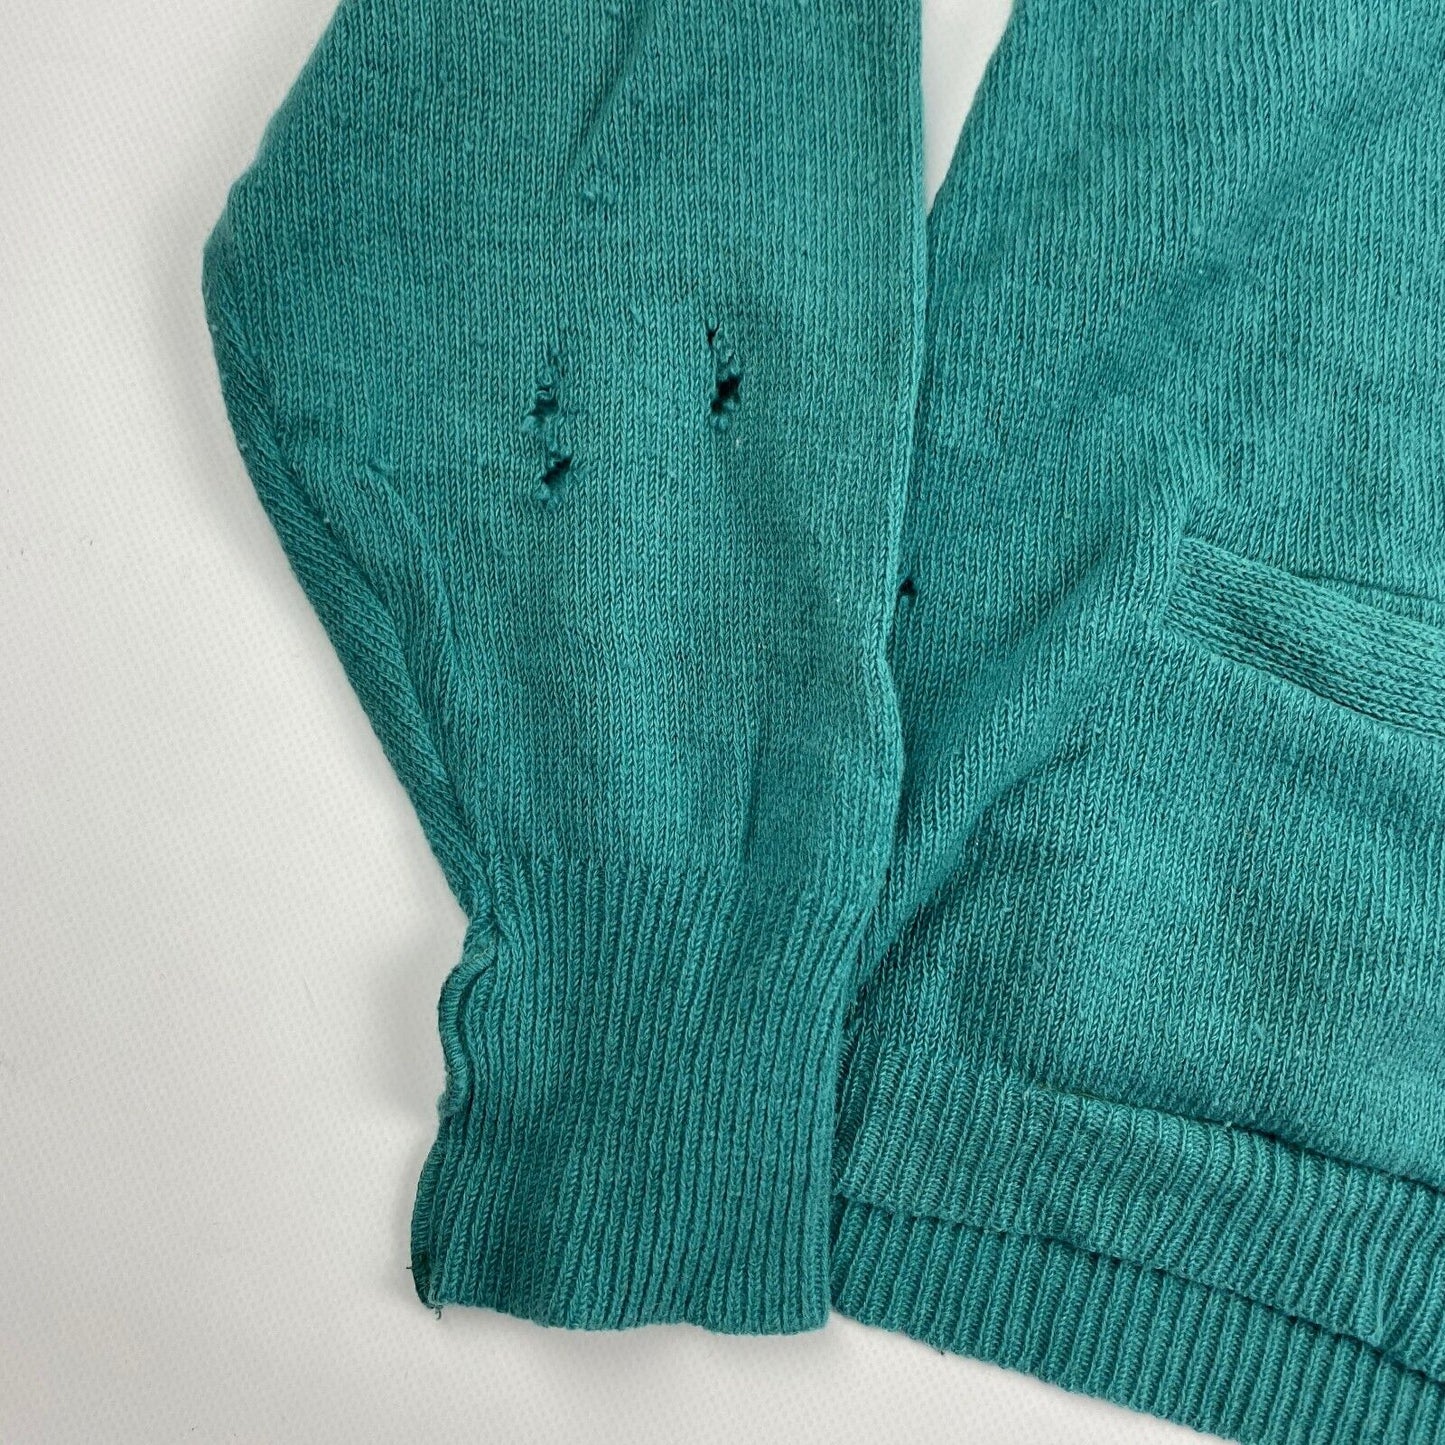 VINTAGE 80s Penmans Teal Wool Distressed Cardigan Sweater sz Small Men